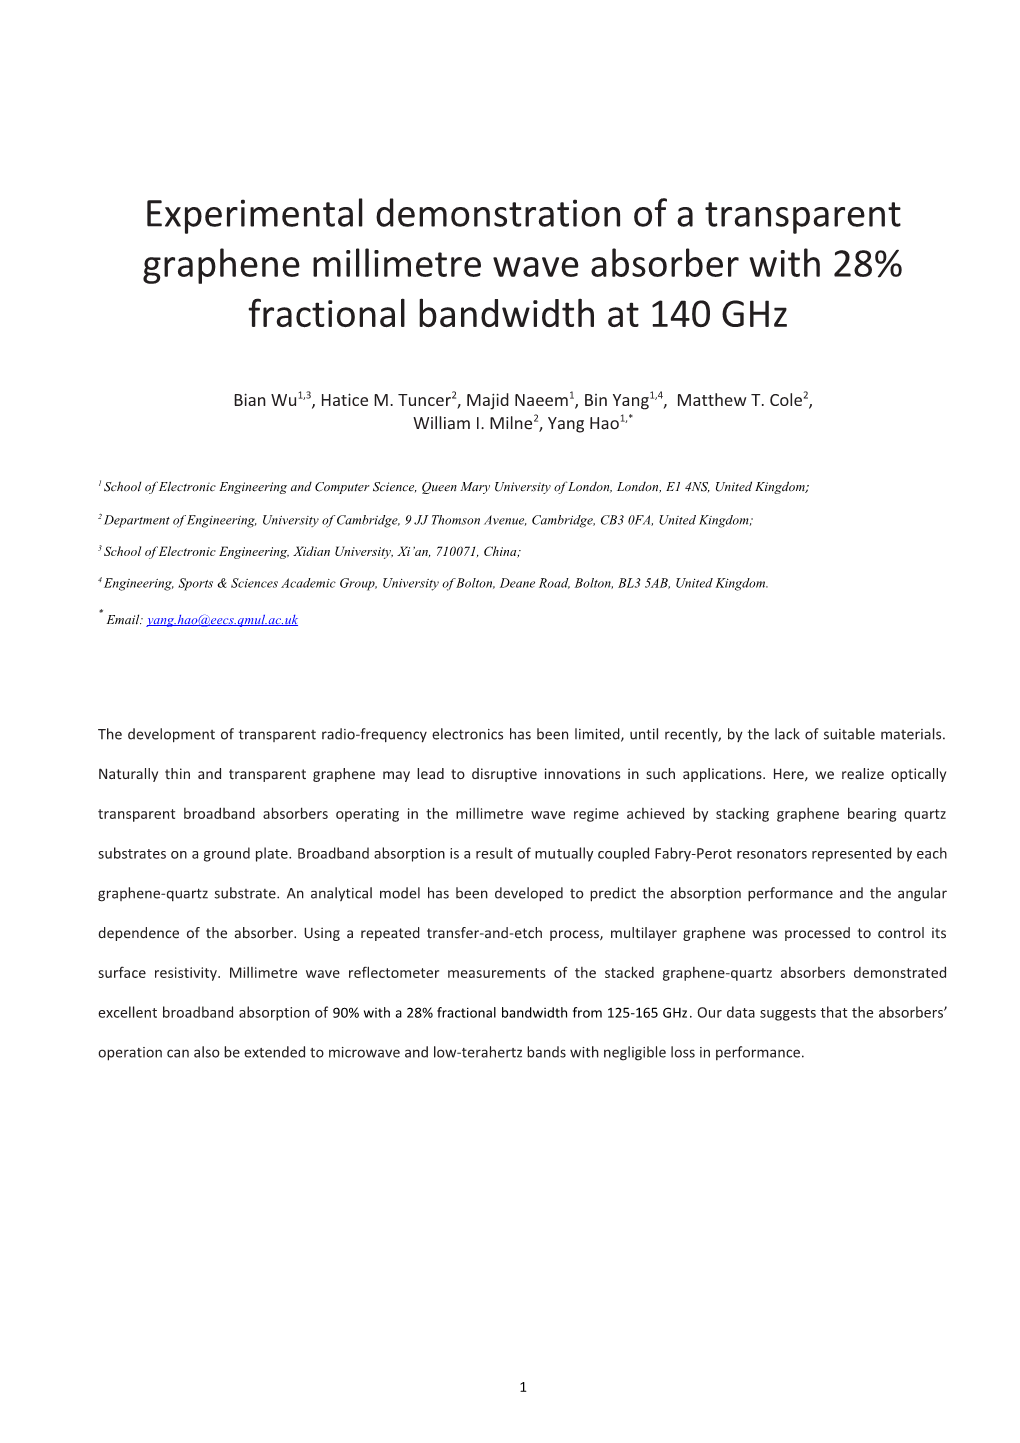 Experimental Demonstration of Transparent Graphene Absorber for Broadband Microwaves